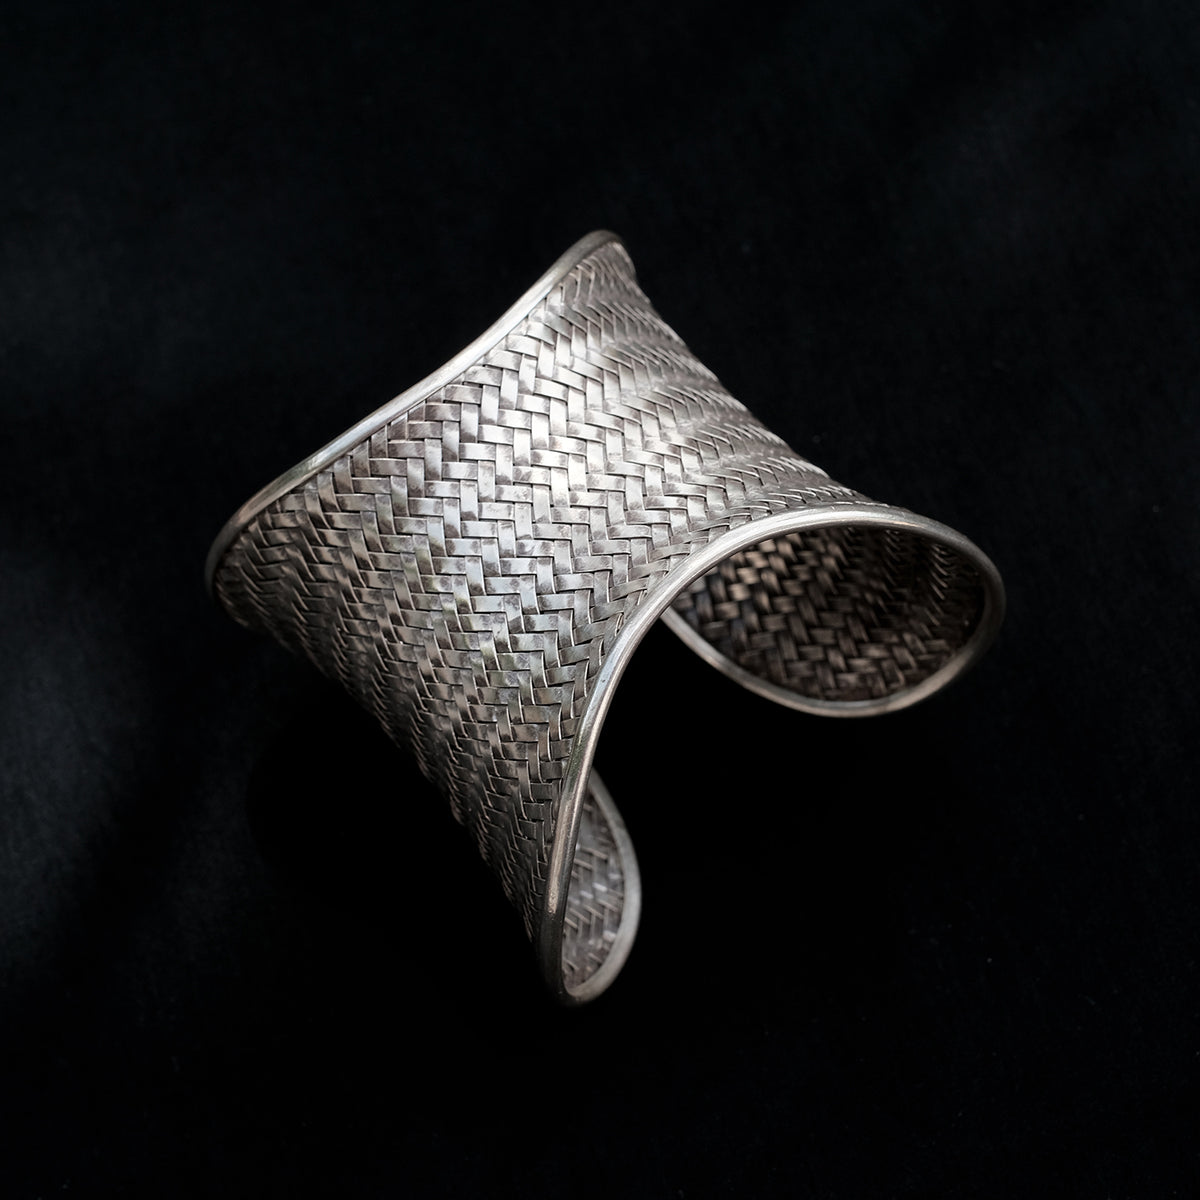 Brazalete de plata de gran pureza , elaborada a mano por los Karen, etnia asentada fundamentalmente en Birmania, Laos y Tailandia.  Tamaño ajustable.  Peso 60 g.Handmade silver bracelet.